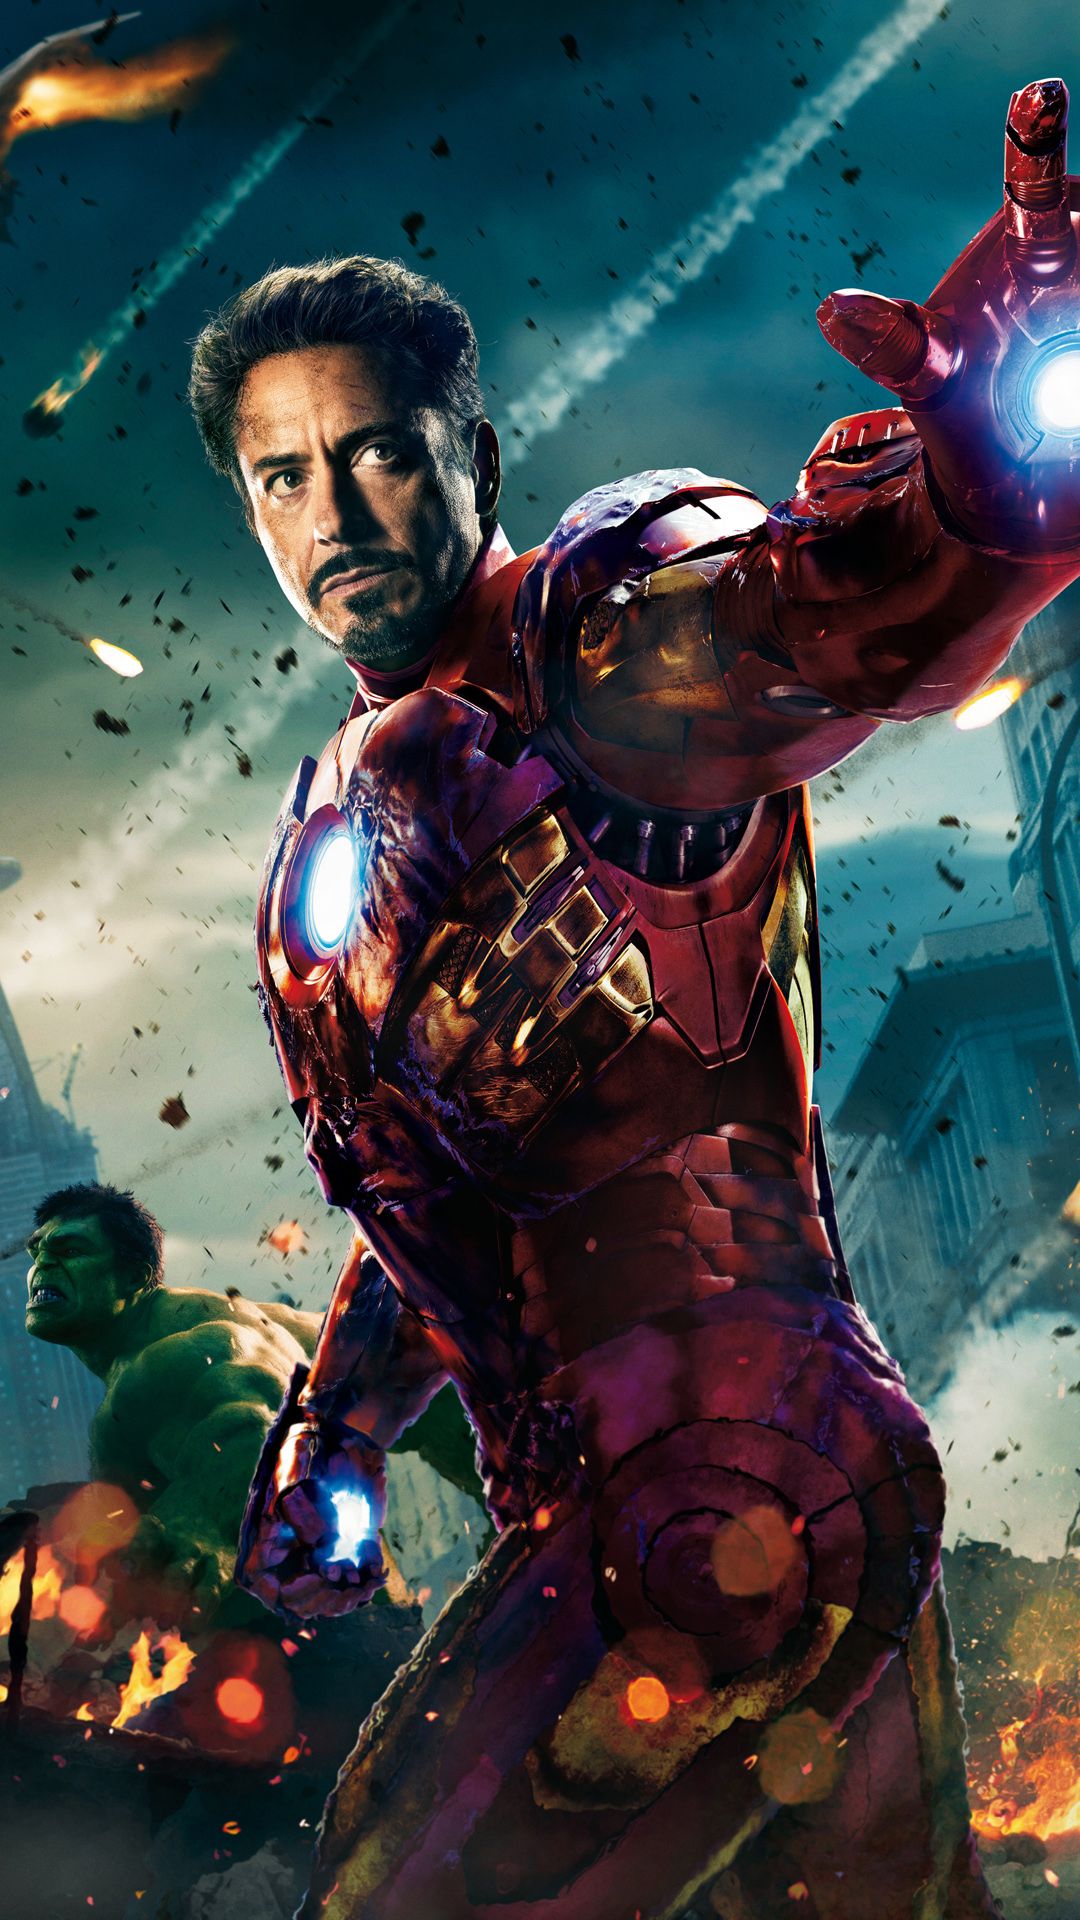 The Avengers Ironman and Hulk htc one wallpaper, free